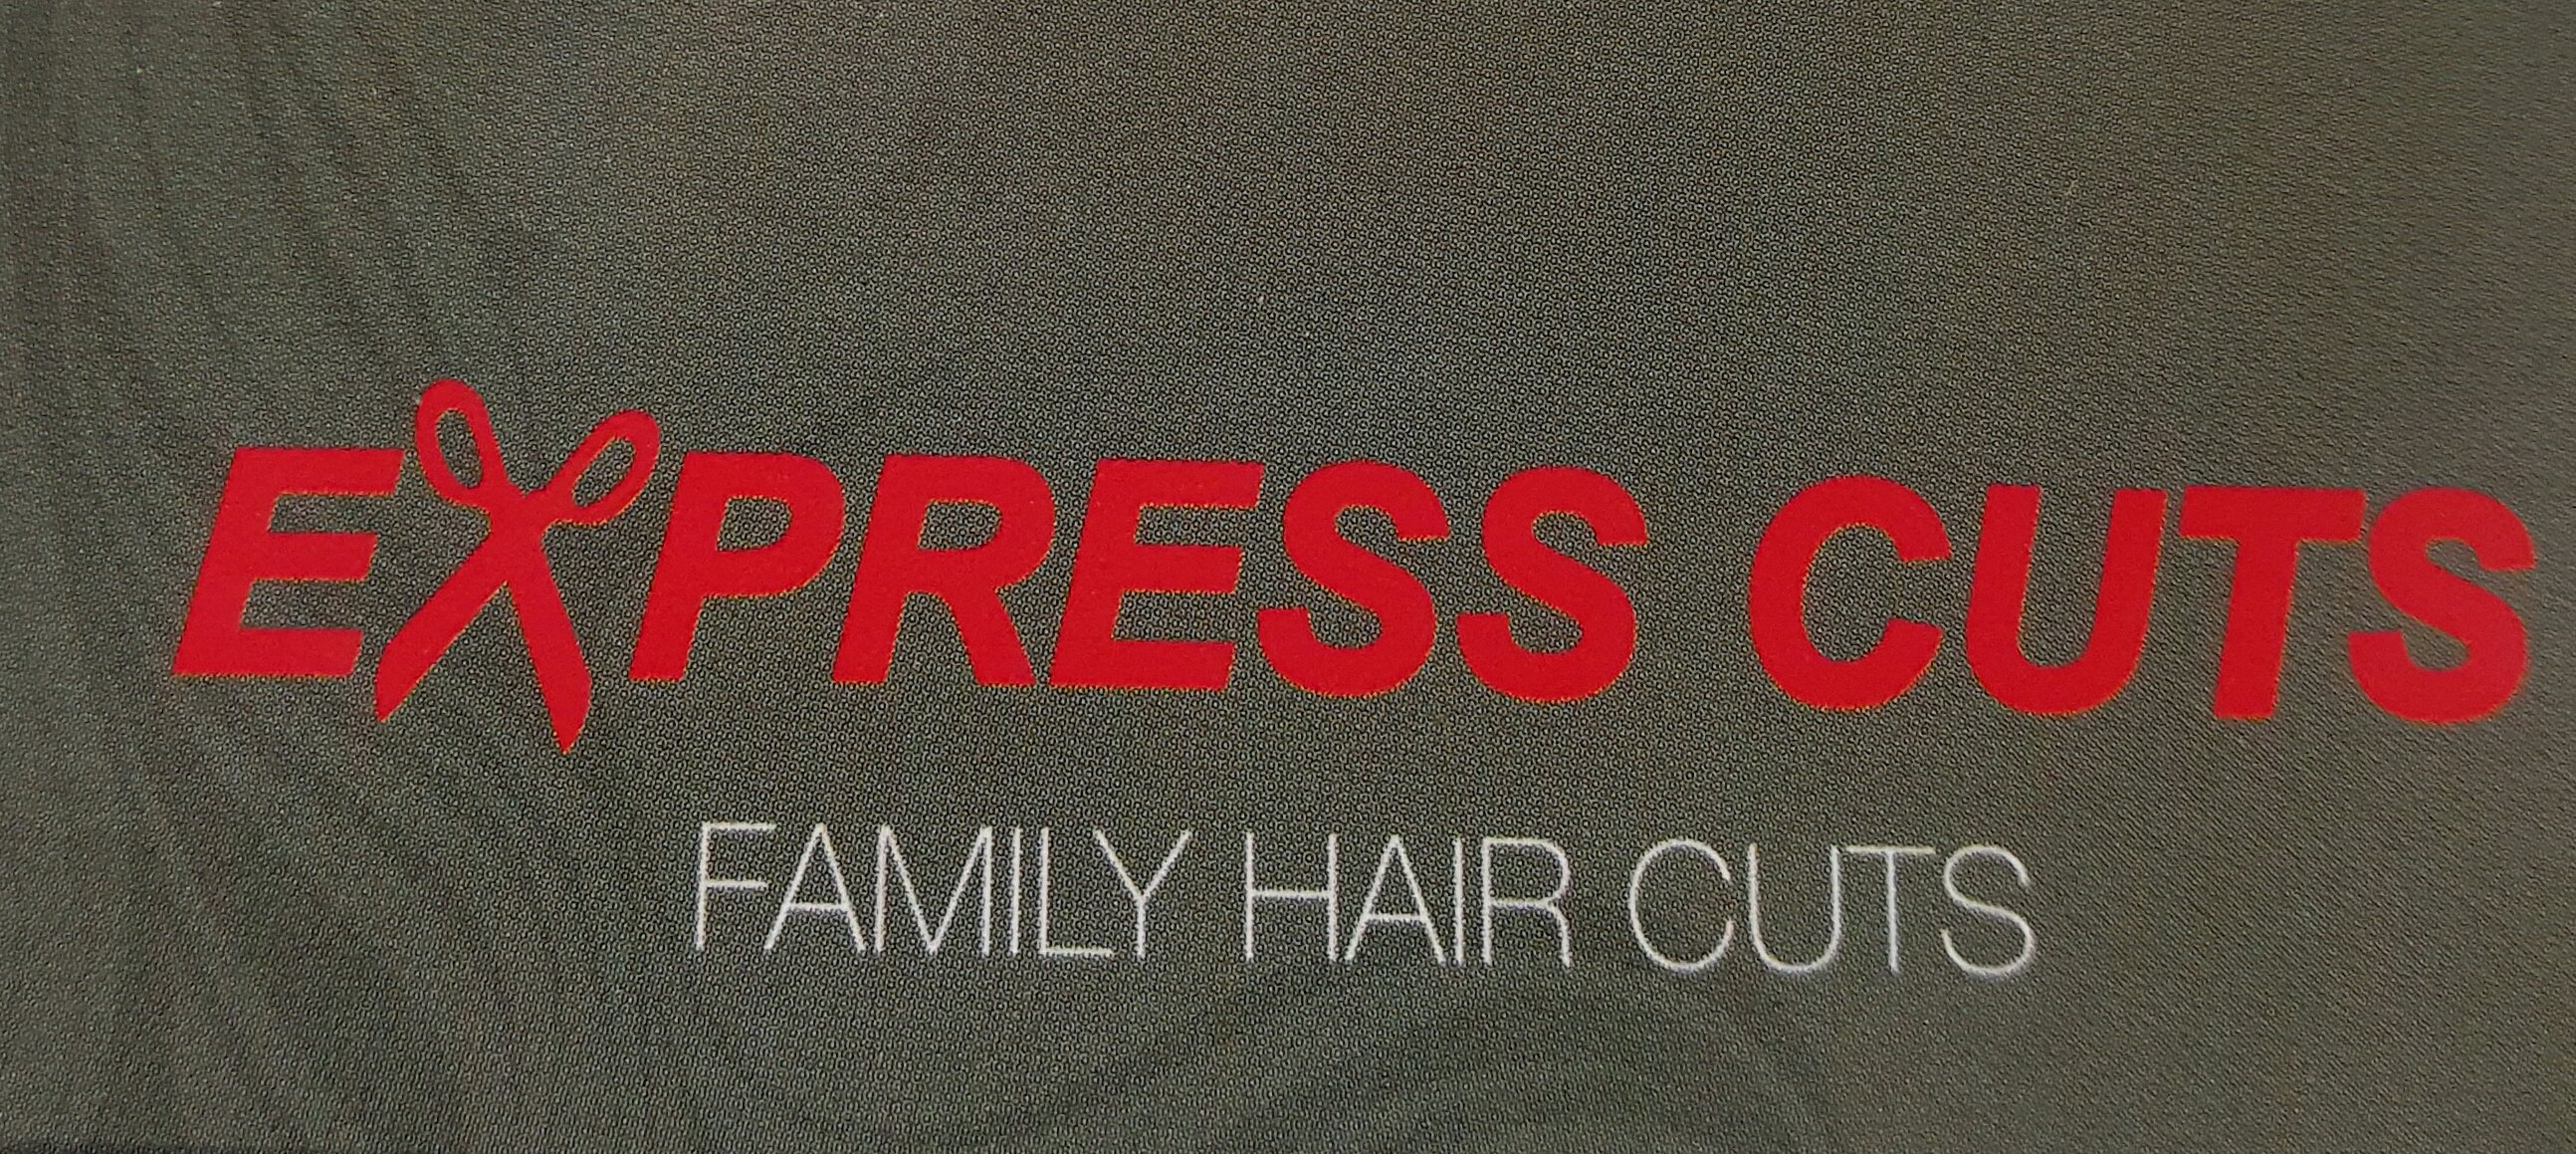  EXPRESS CUTS FAMILY HAIR CUTS